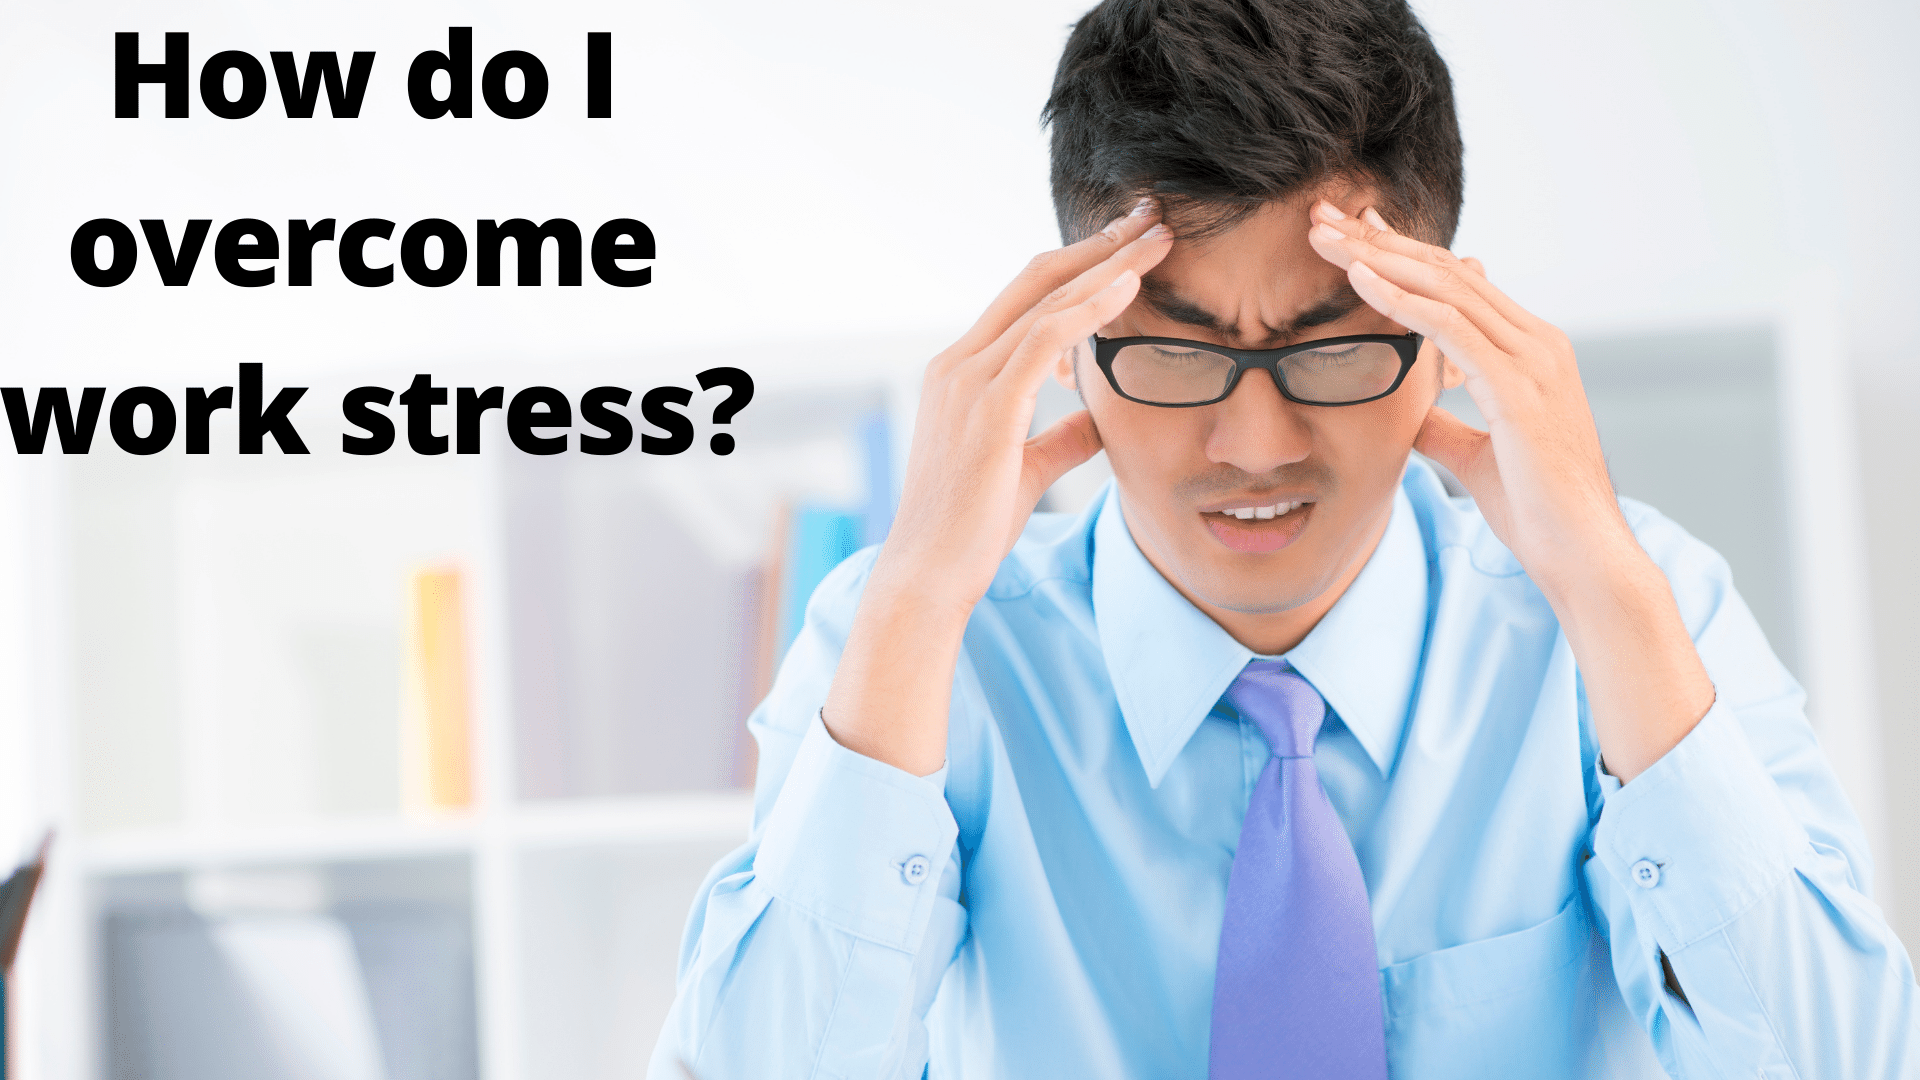 How do I overcome work stress?